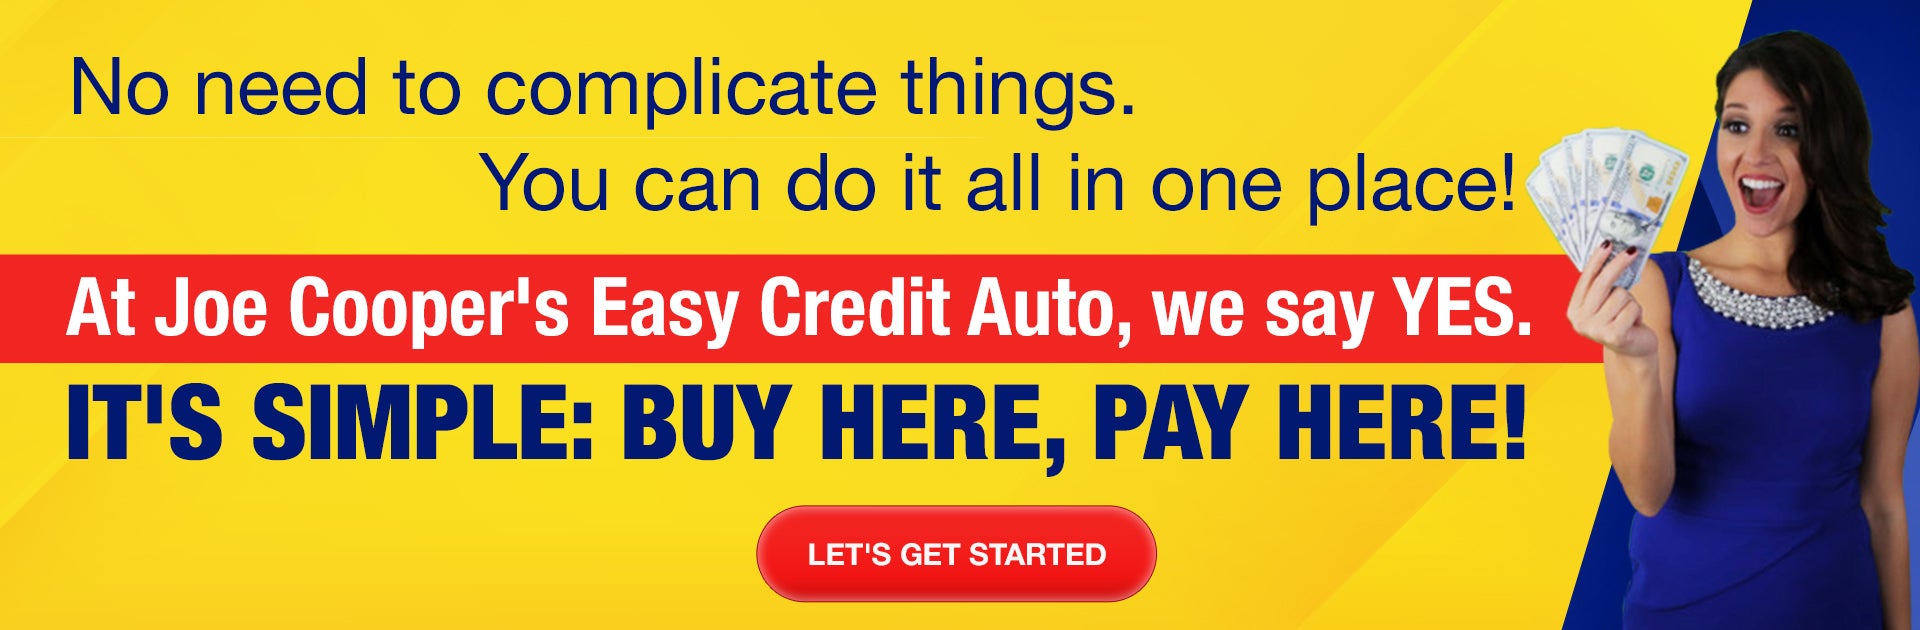 Joe Cooper's Easy Credit Auto | OKC Used Car Dealership